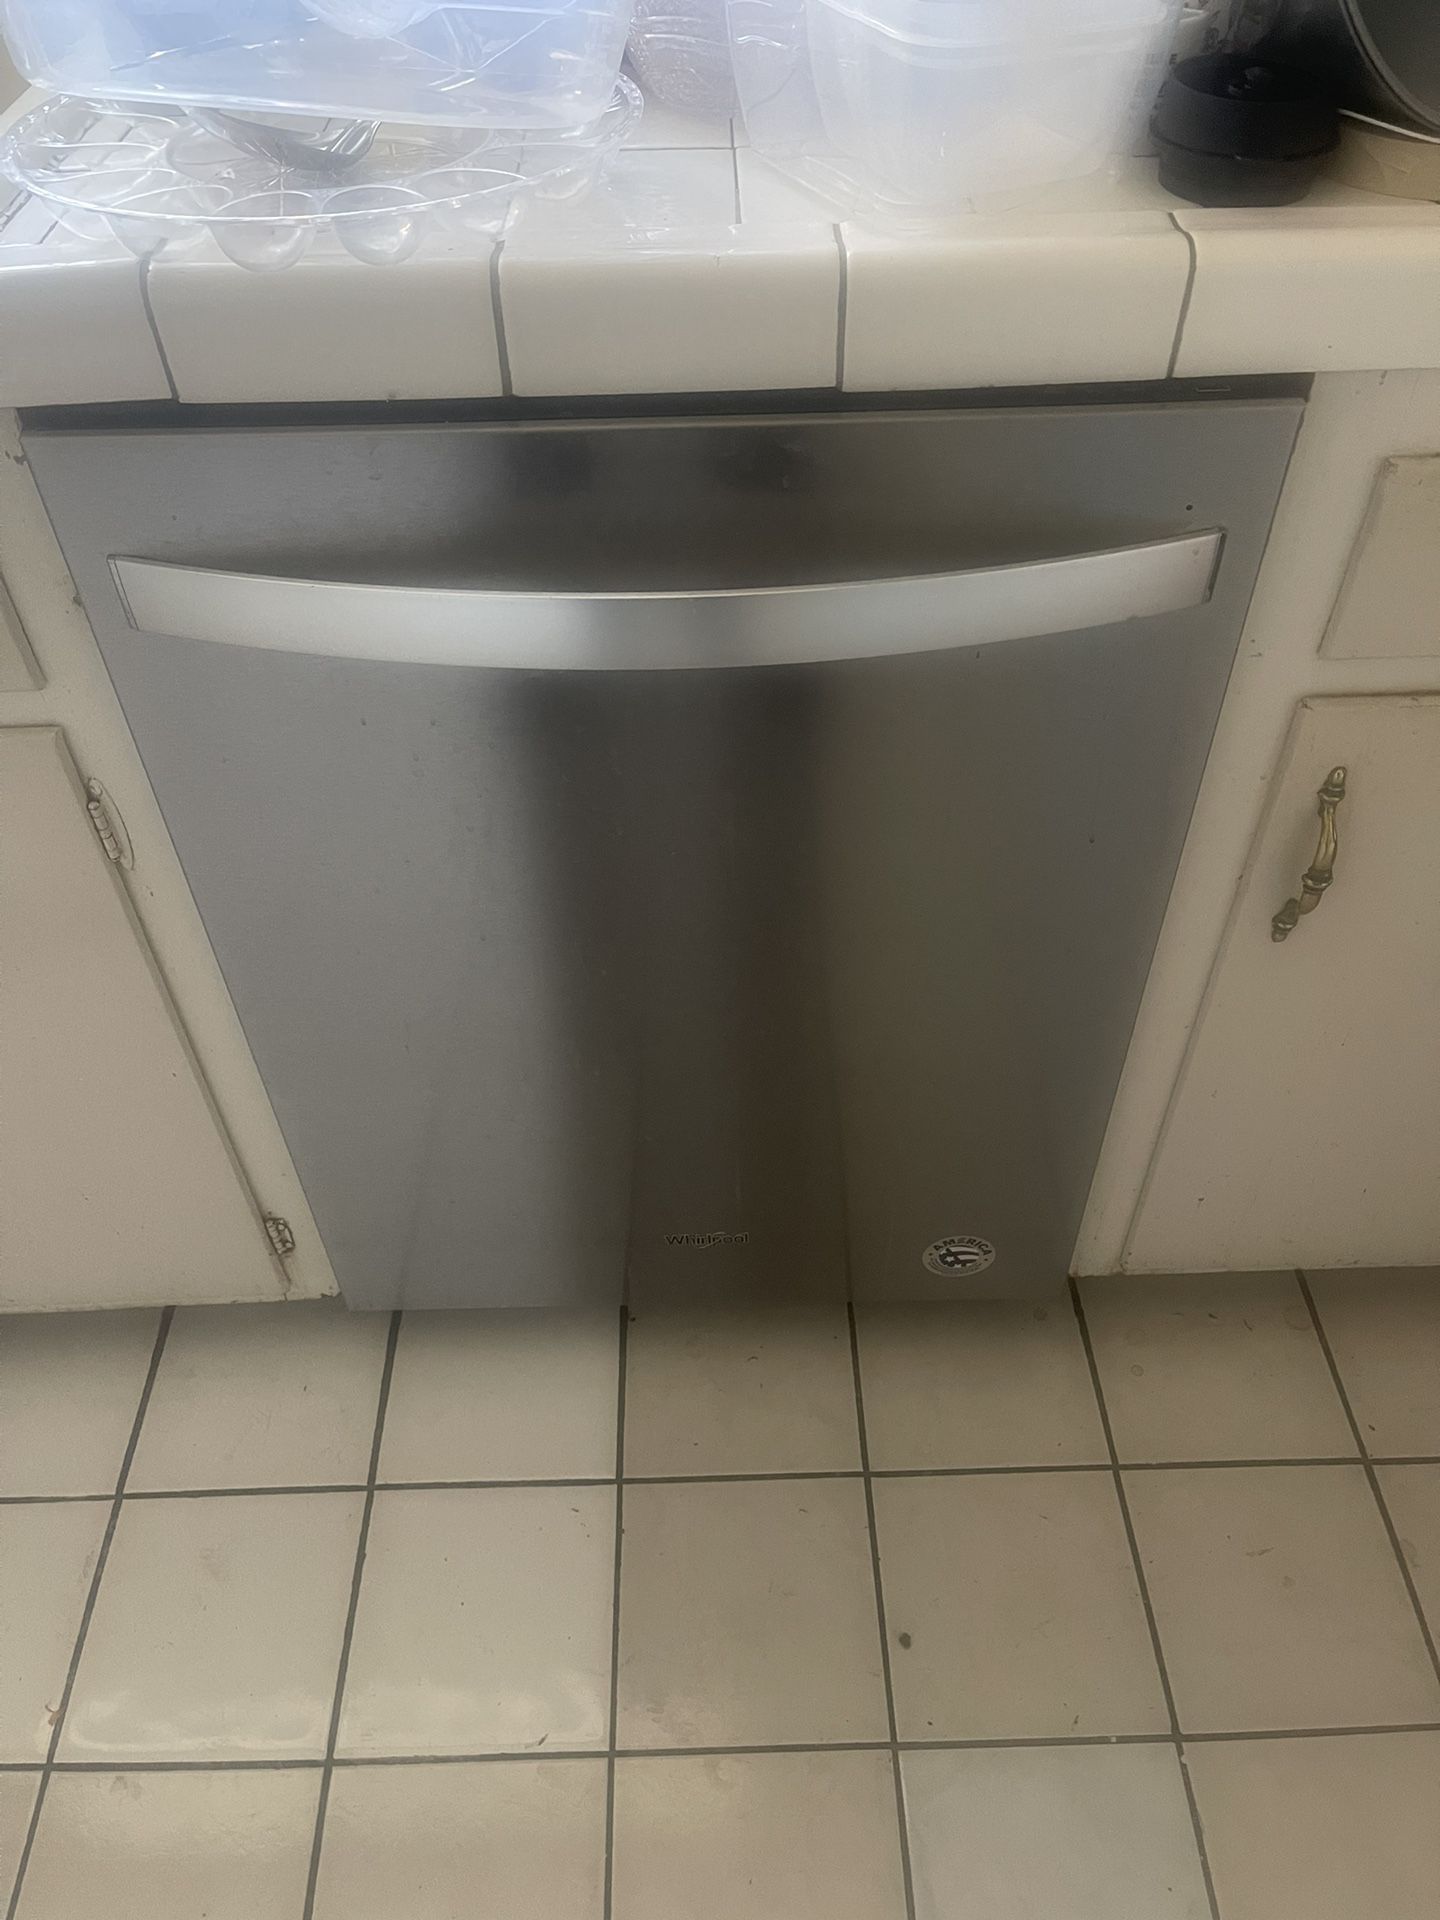 Dishwasher Whirlpool Stainless Steel 